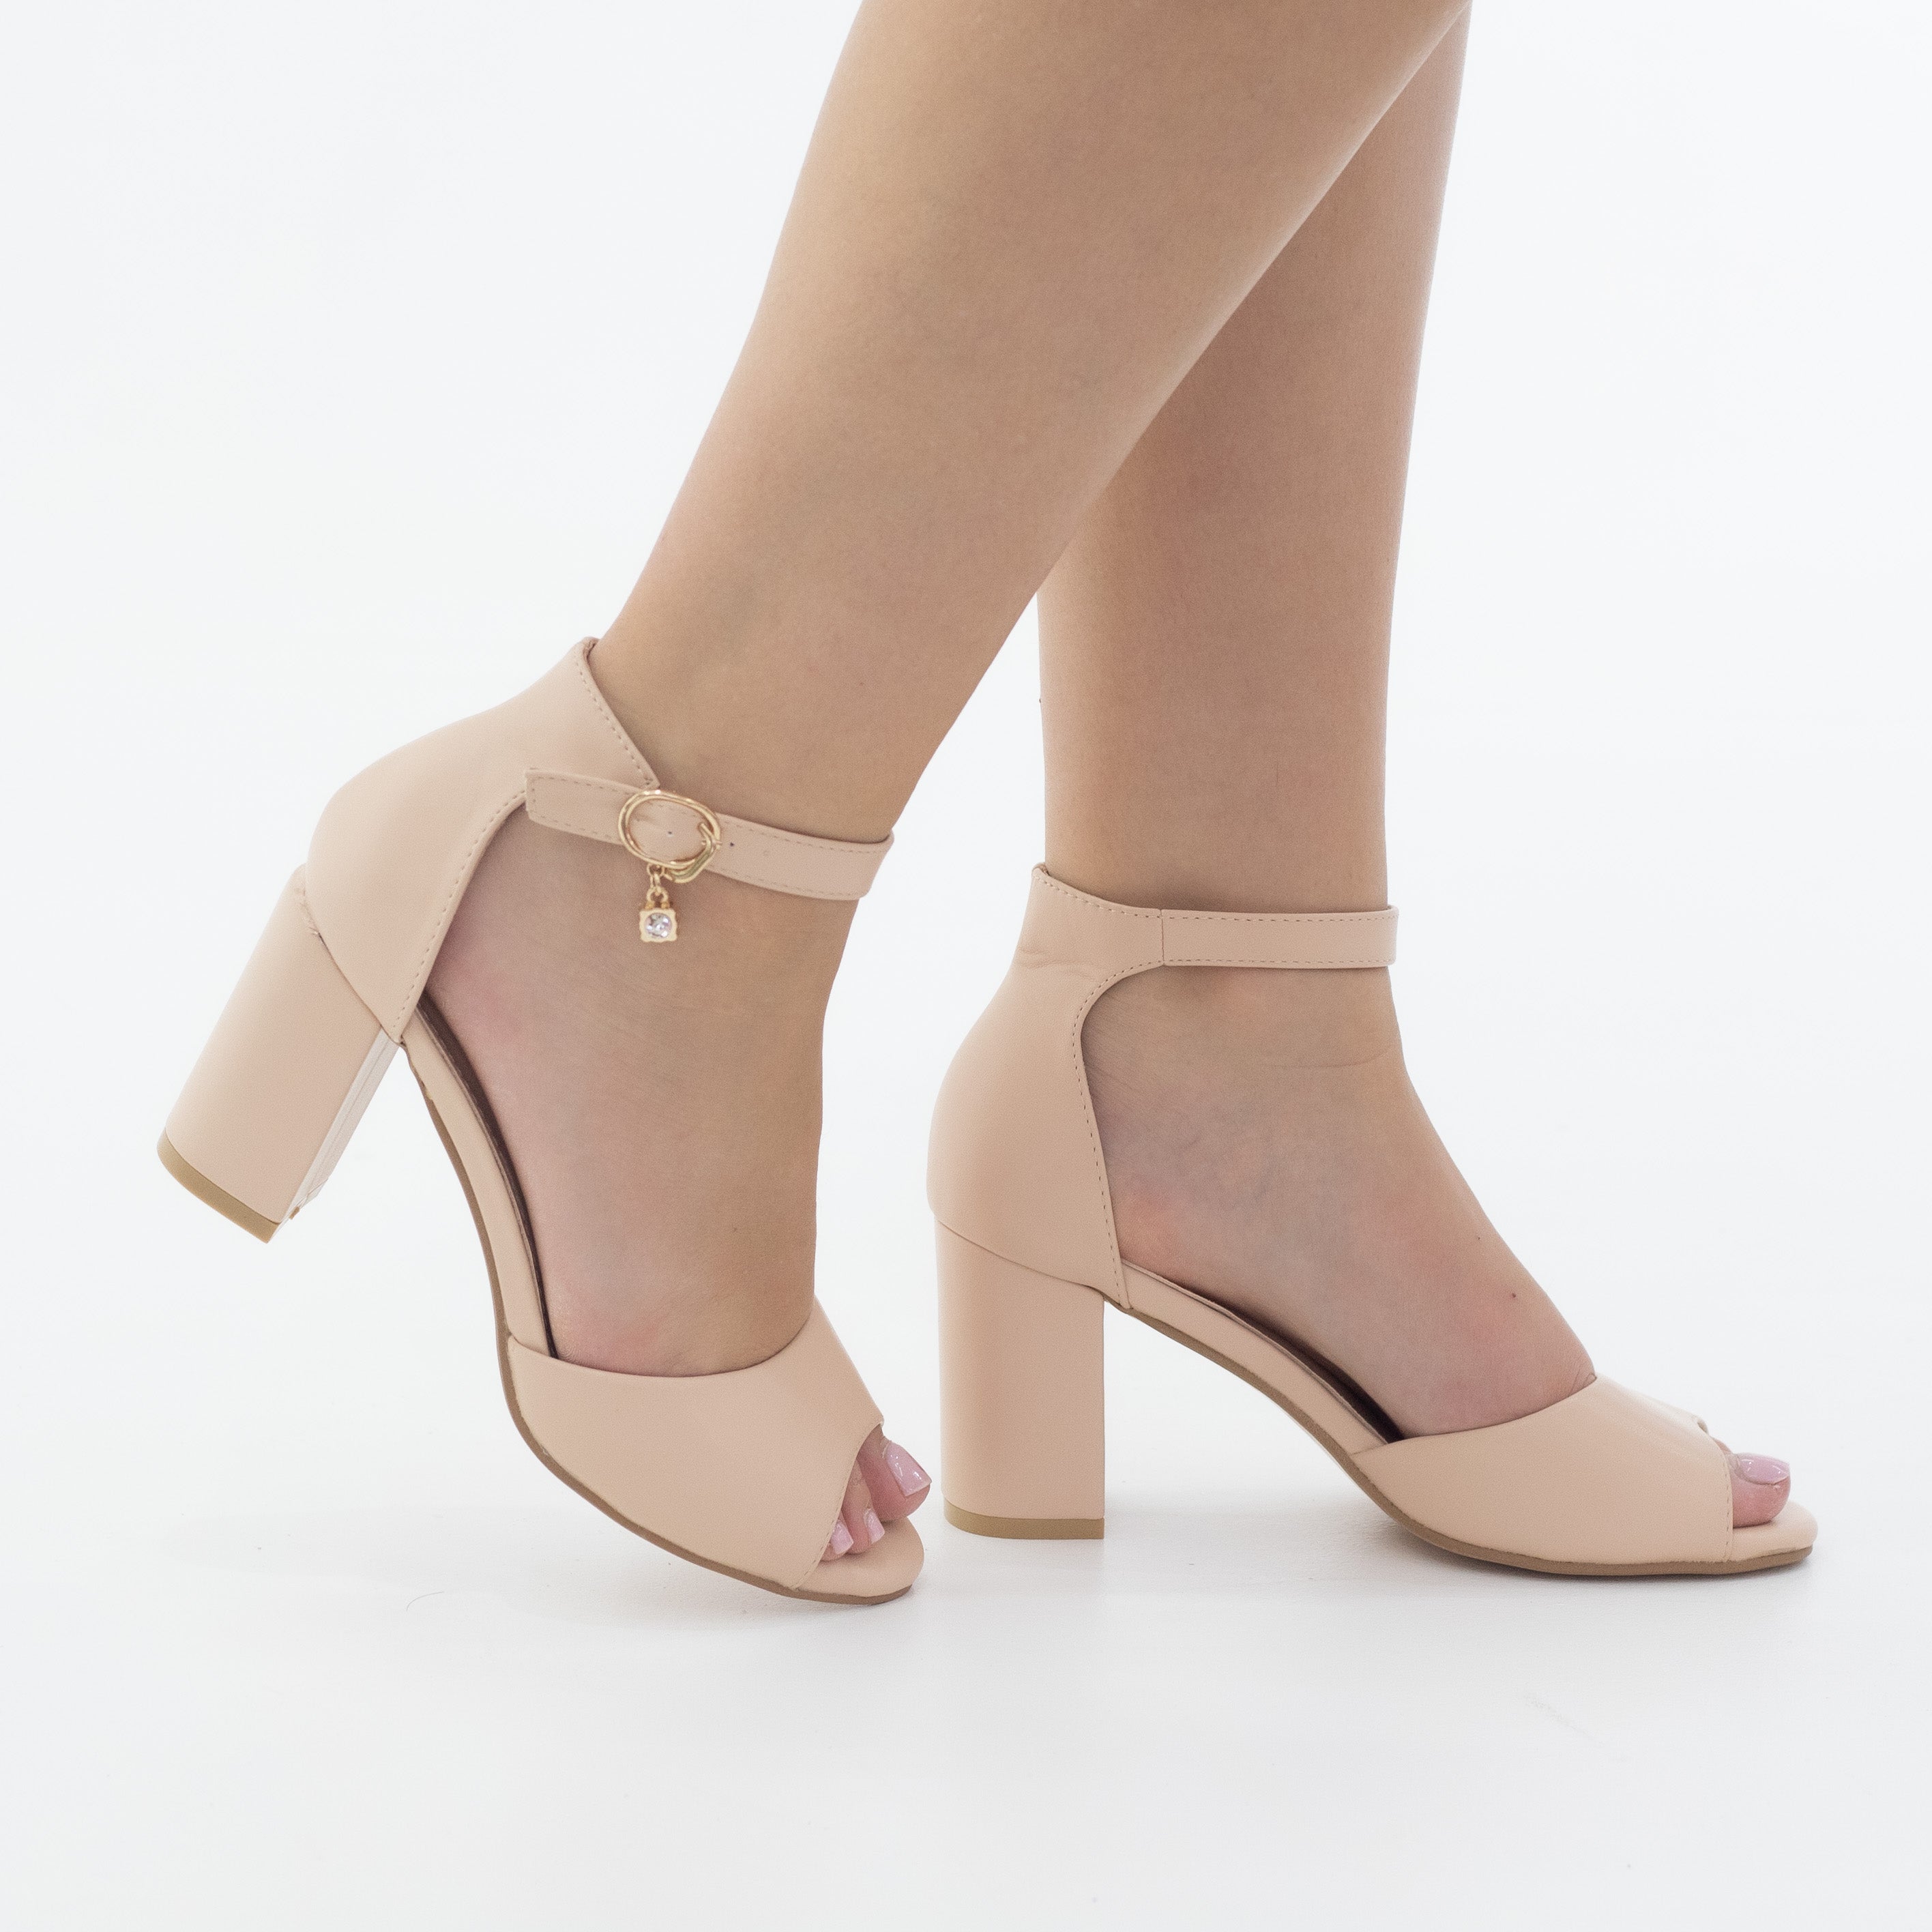 Cosmic bifriss sandal on block 8cm heel PU pink